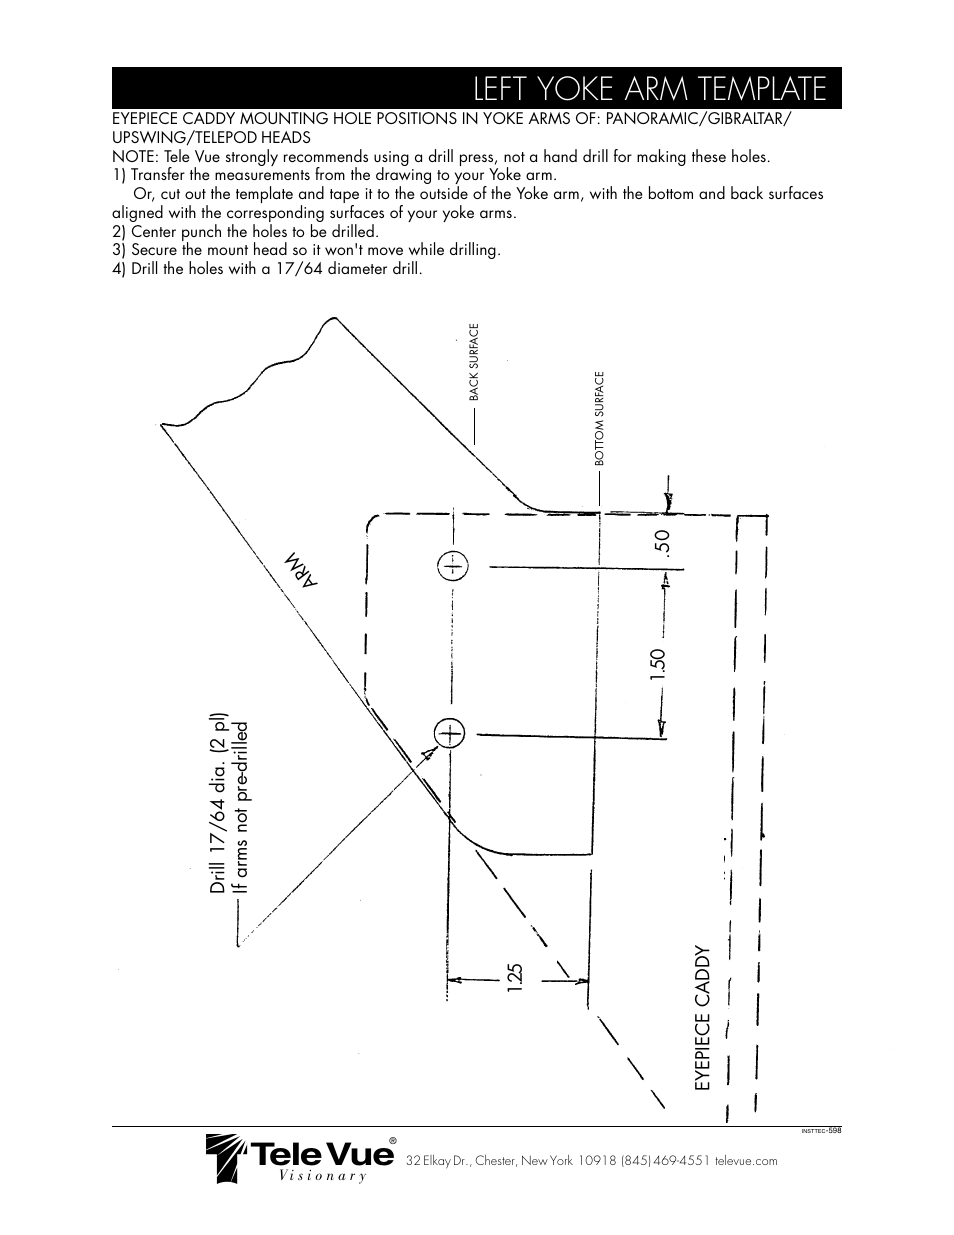 Left yoke arm template, Tele vue | Tele Vue Eyepiece Caddy Set User Manual | Page 2 / 3